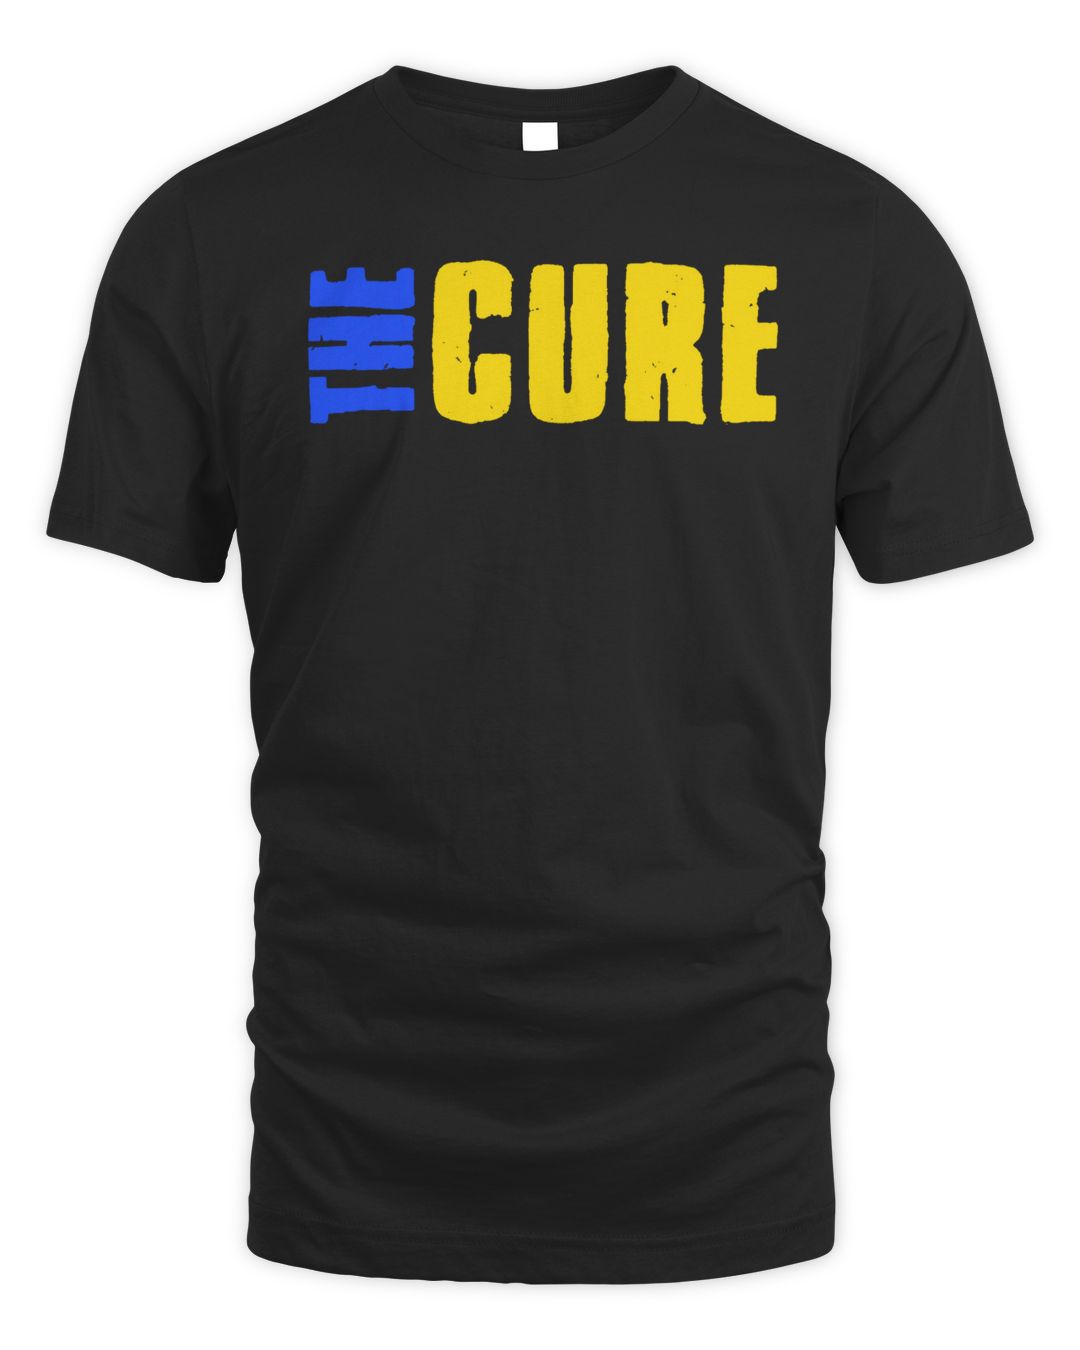 The Cure Merch Ukraine Charity Shirt